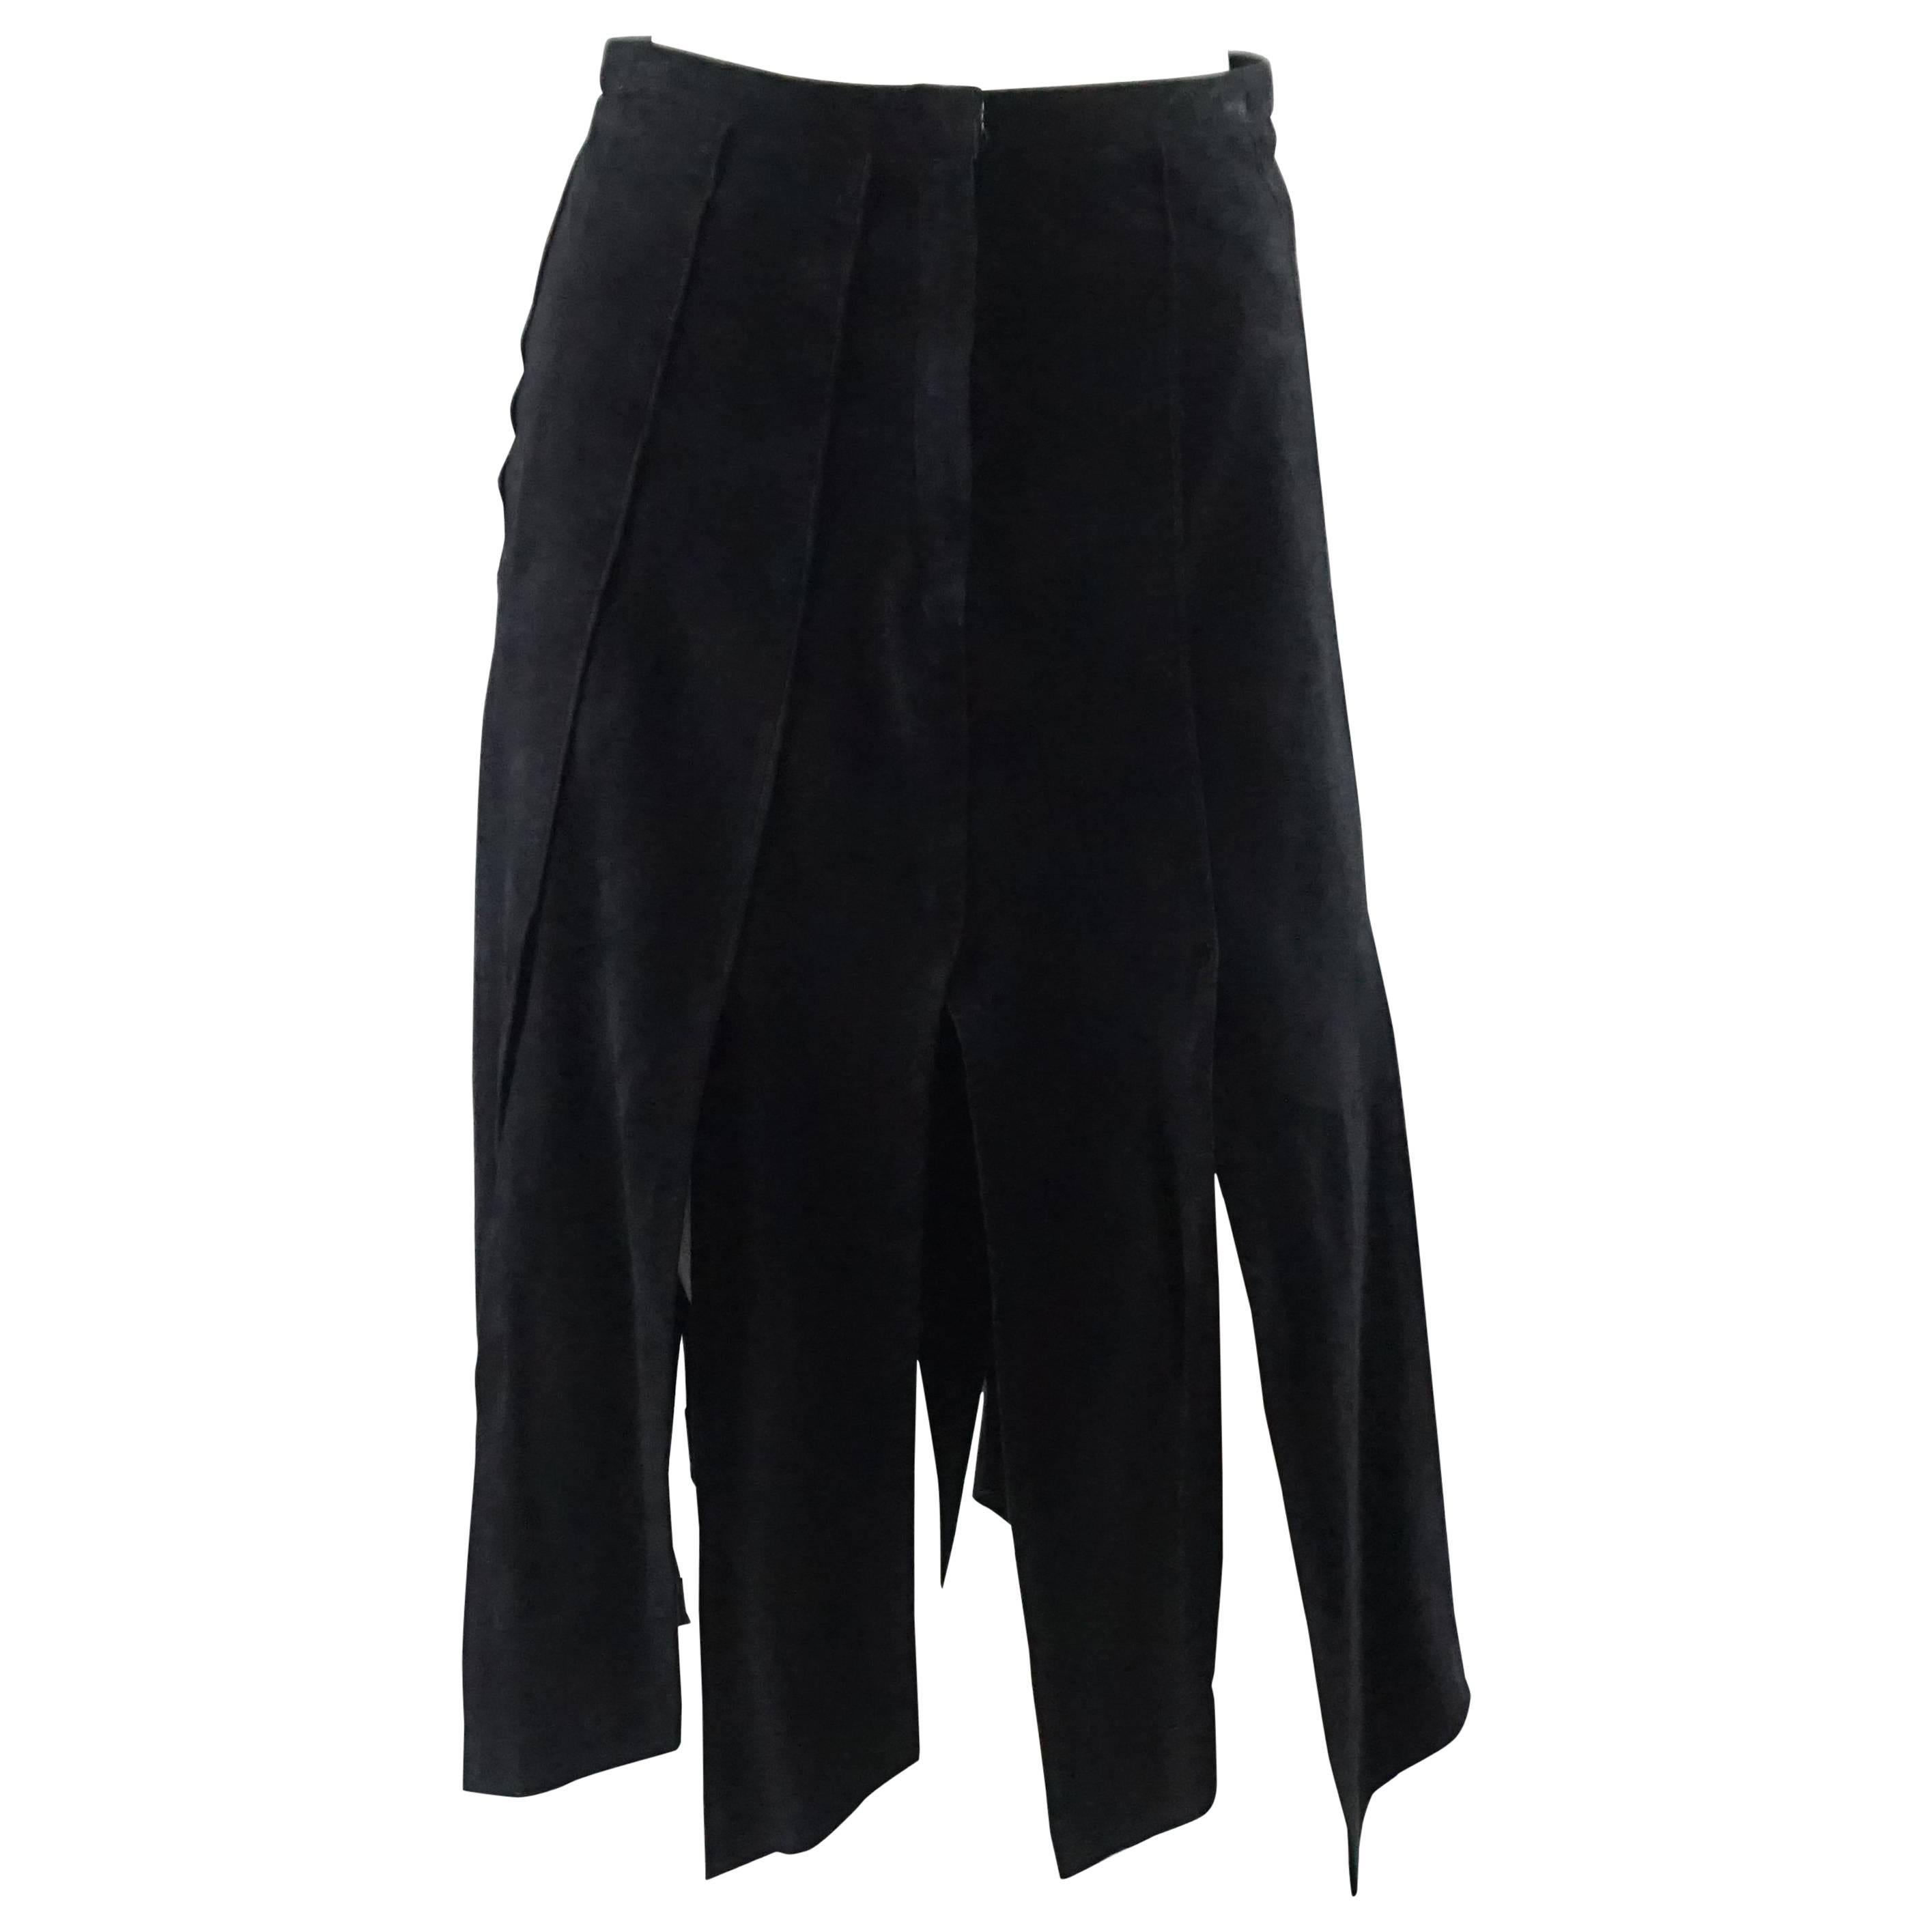 Vintage Black Suede Car Wash Pleat Skirt - M